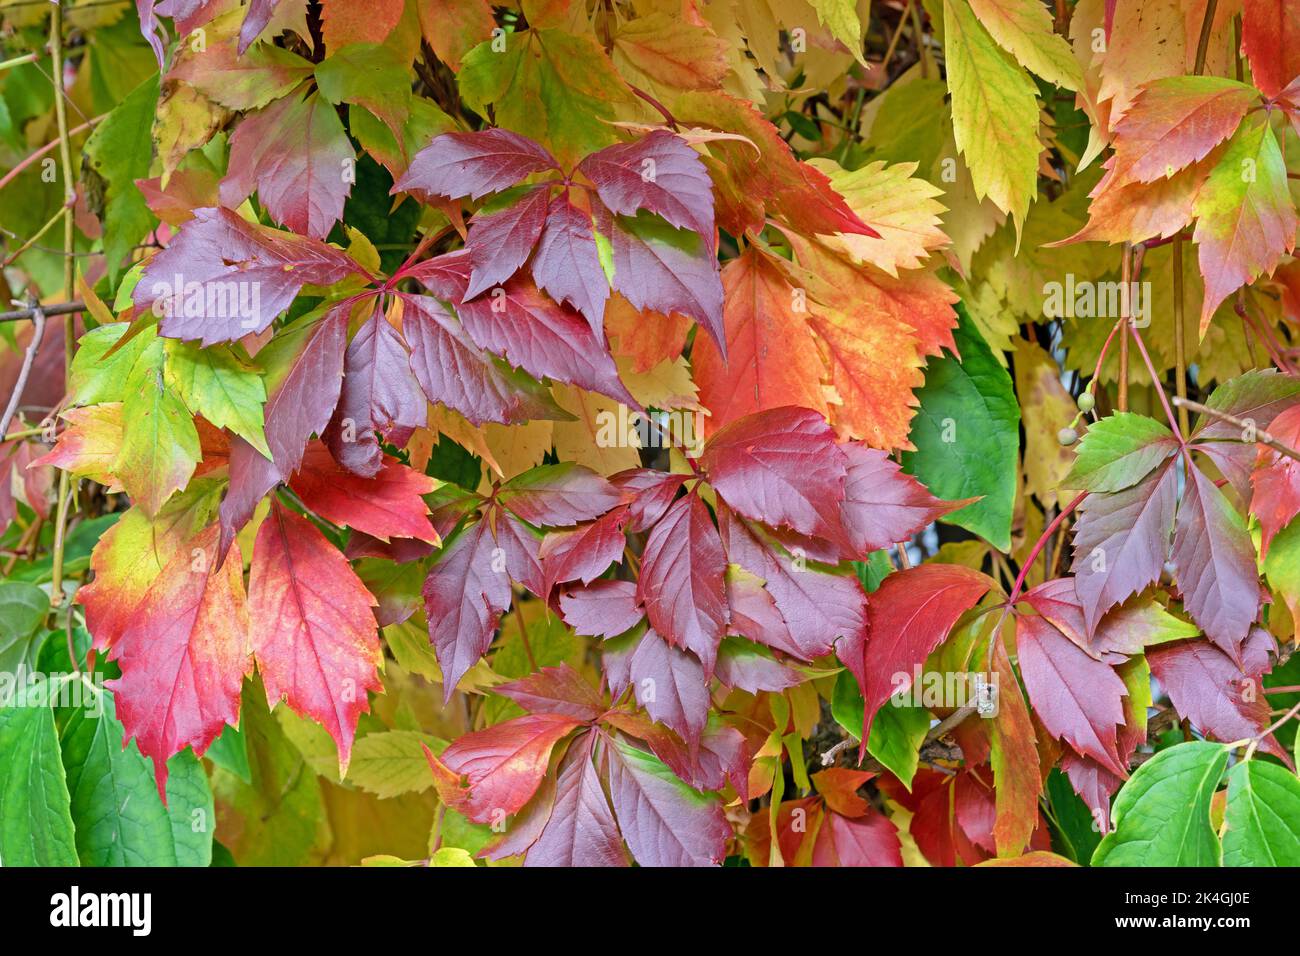 Colorful leaves of girlish grapes or Virginia creeper, Parthenocissus quinquefolia. Natural colors of autumn. Stock Photo